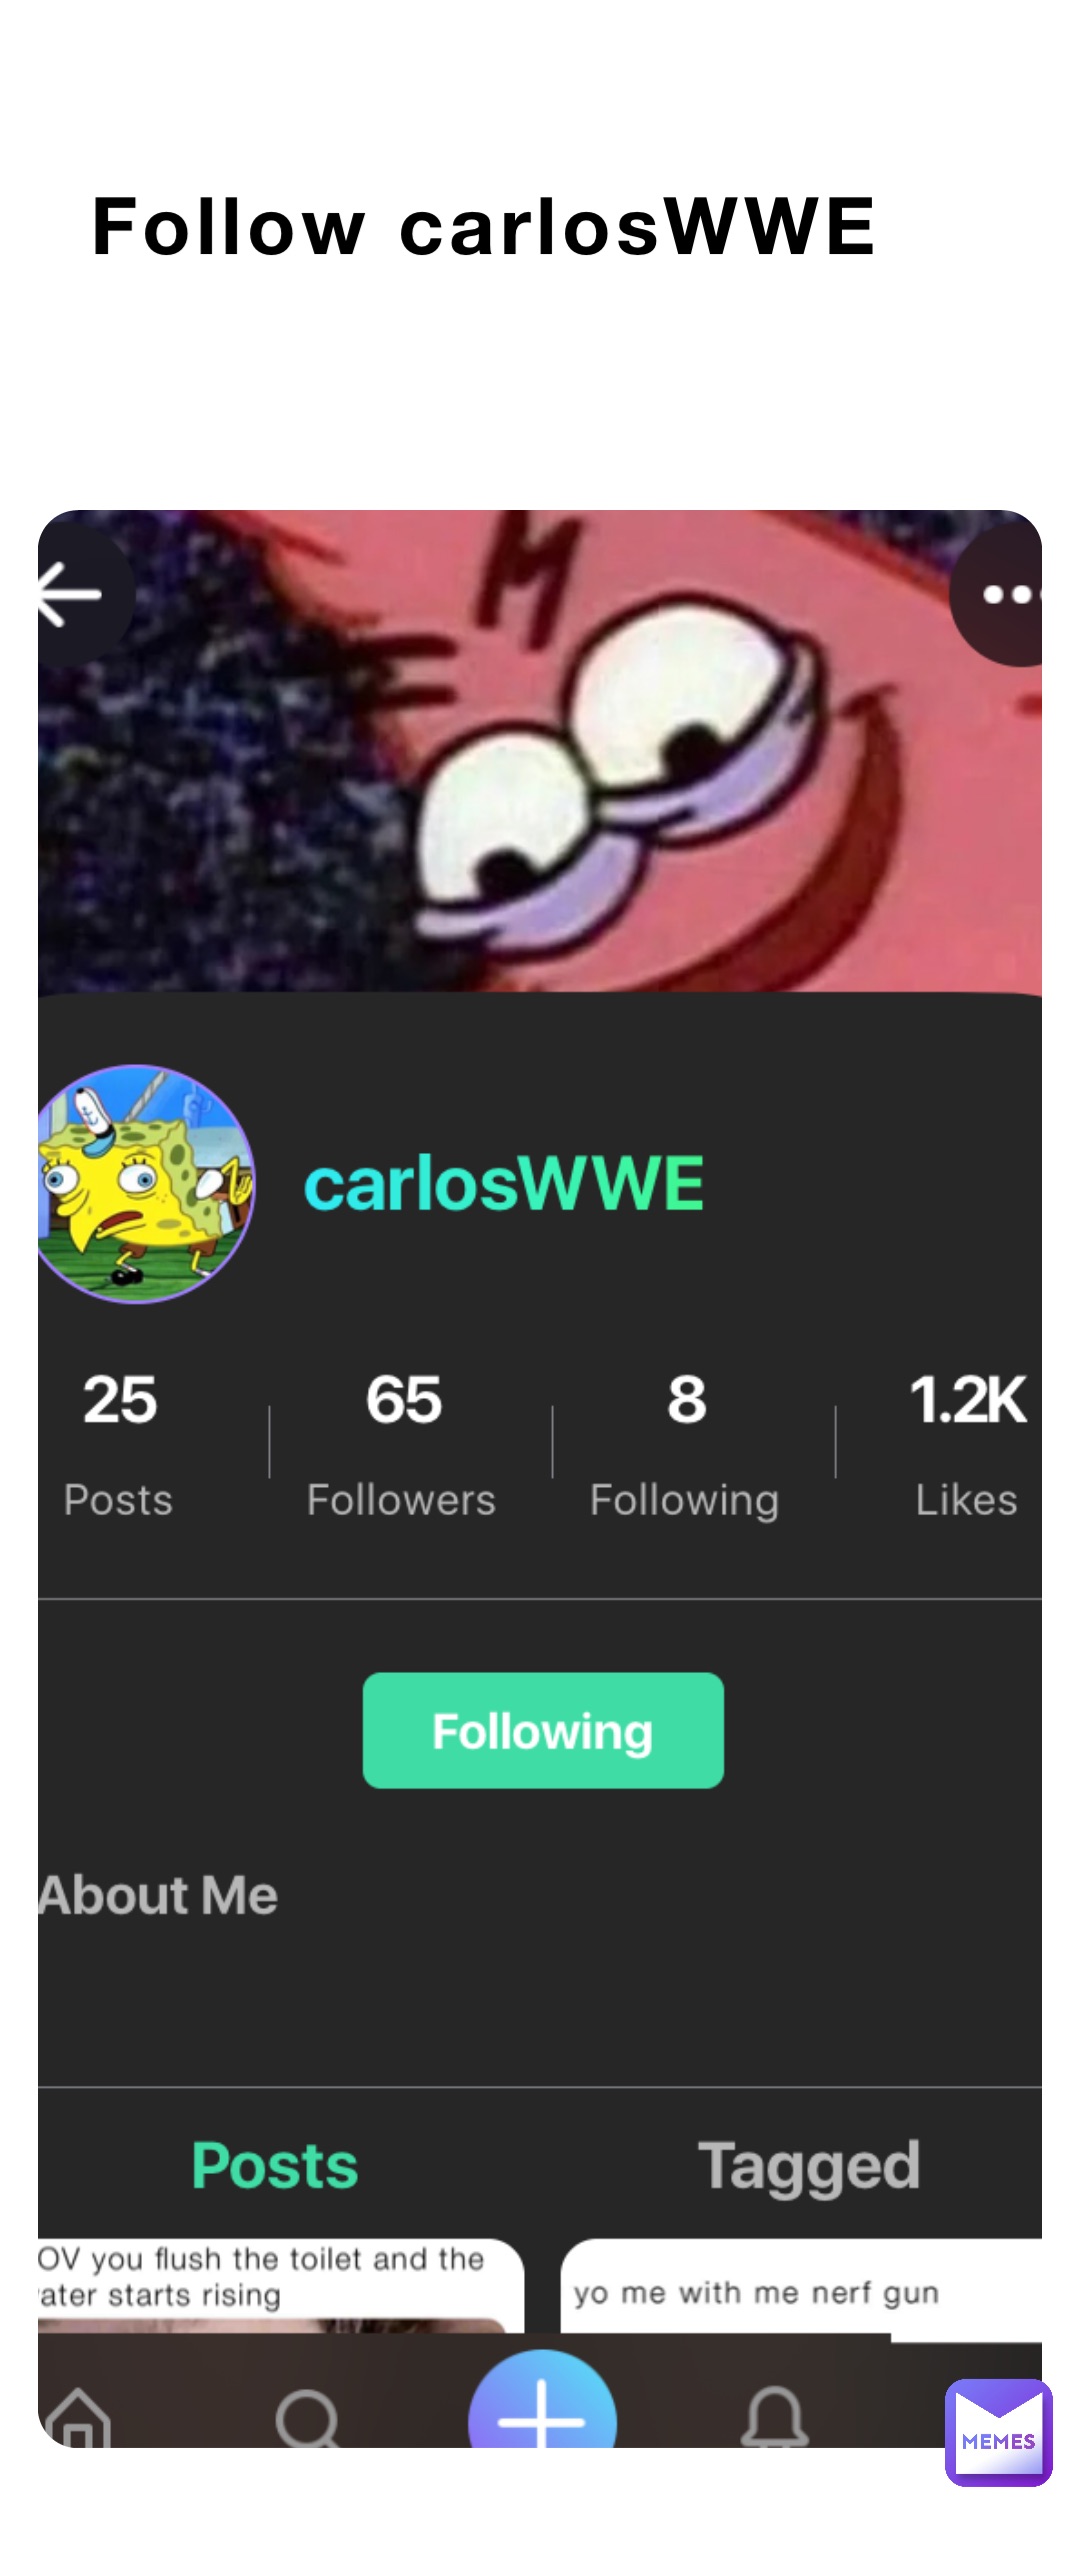 Follow carlosWWE